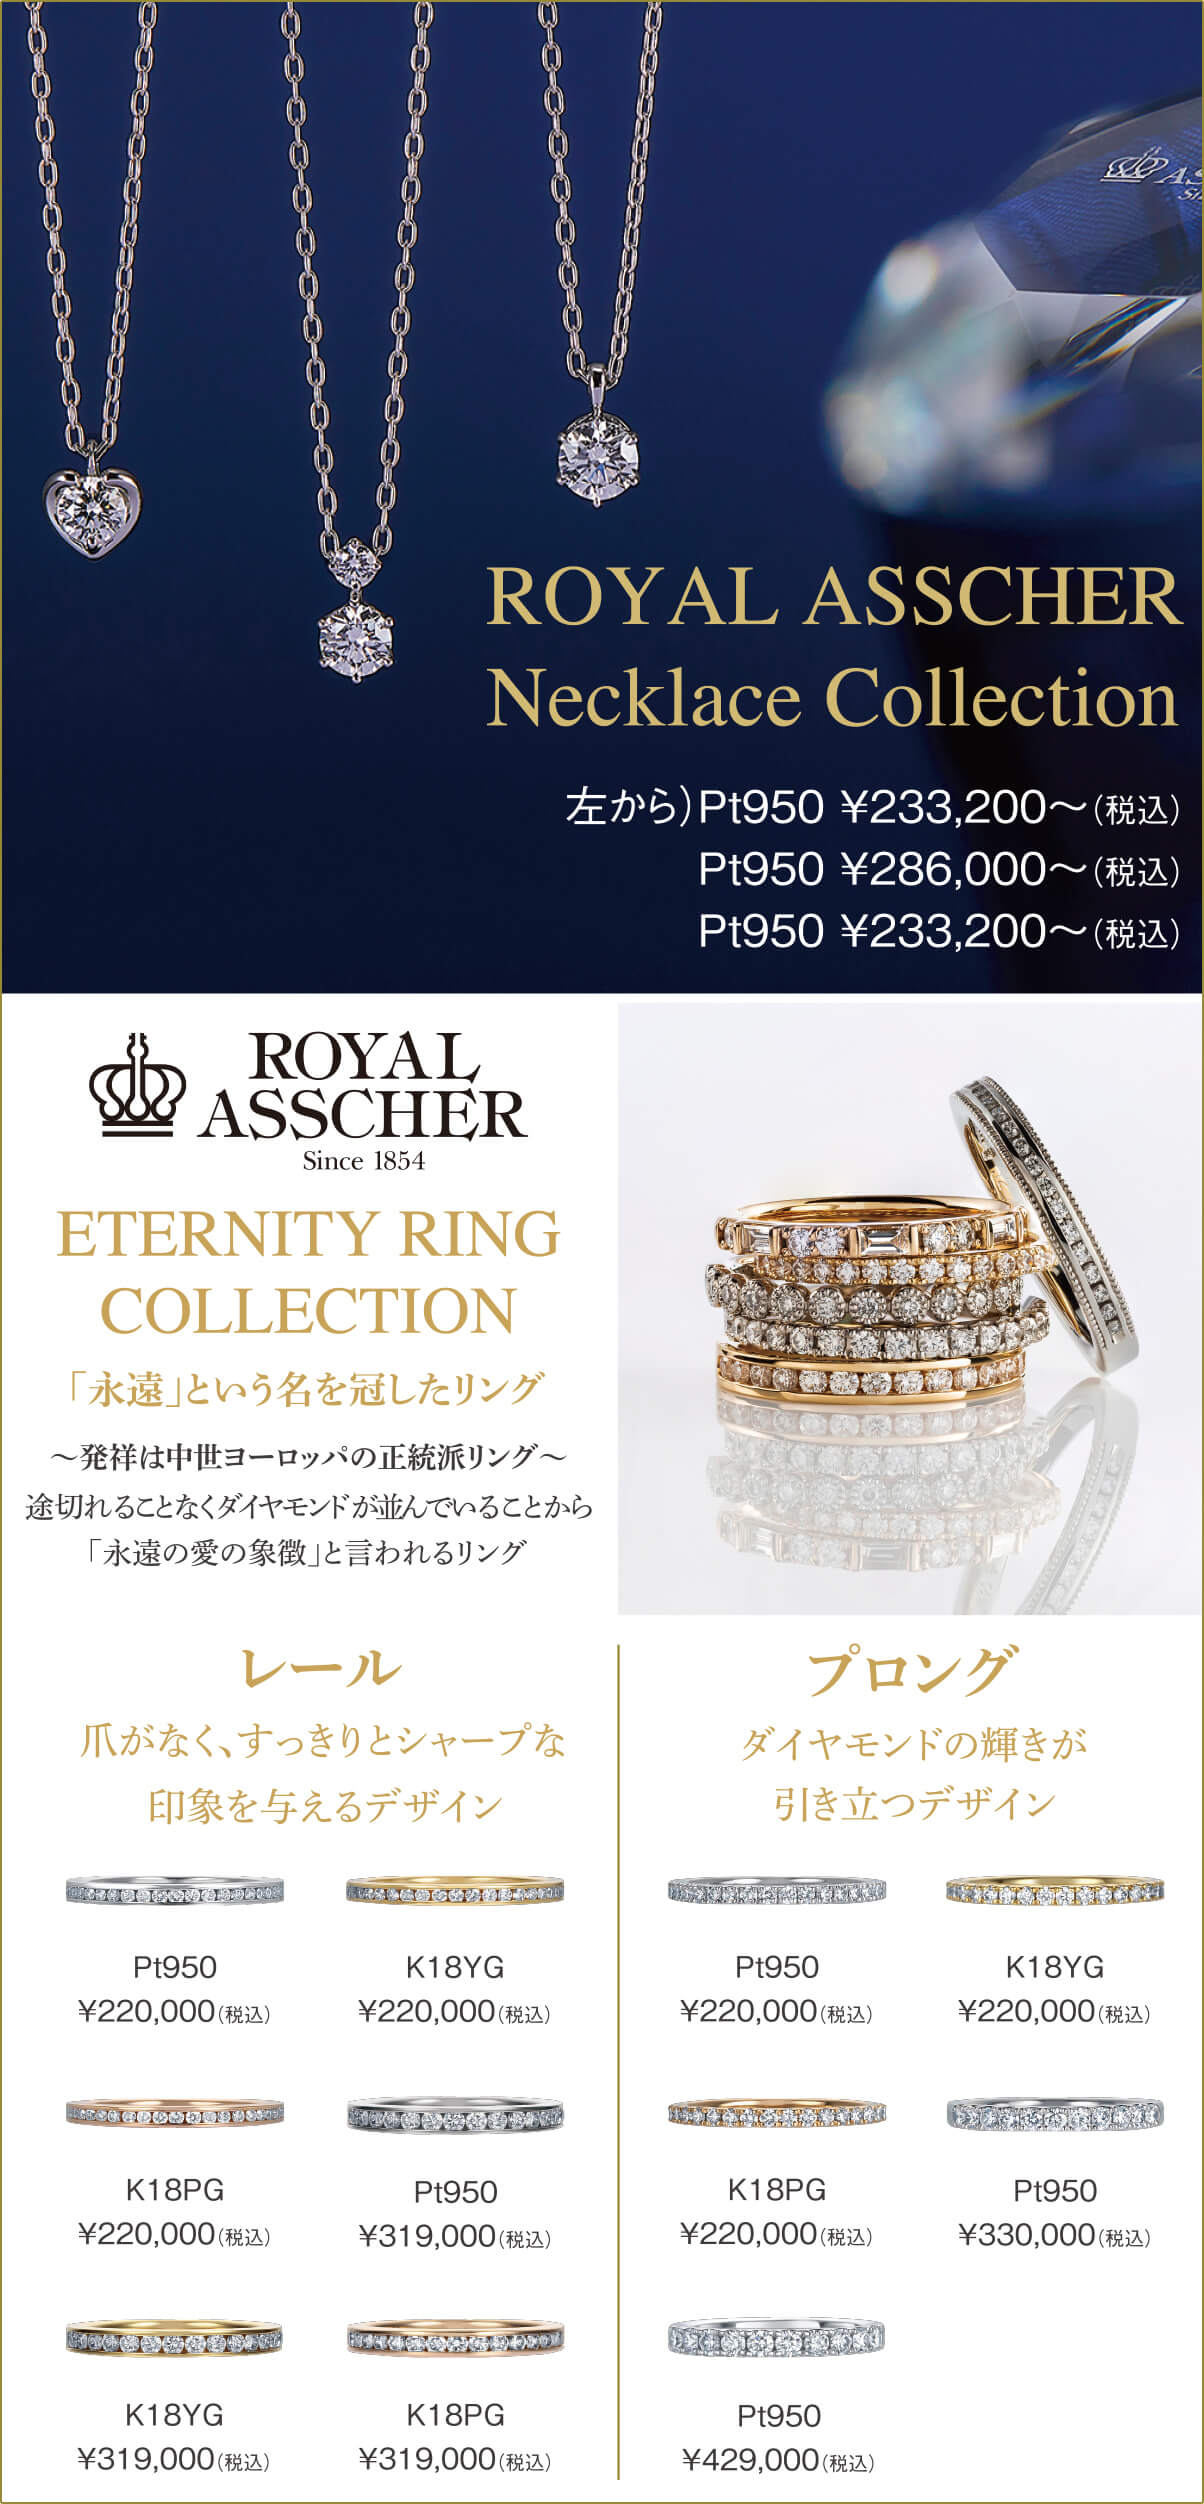 royalasscher necklace collection